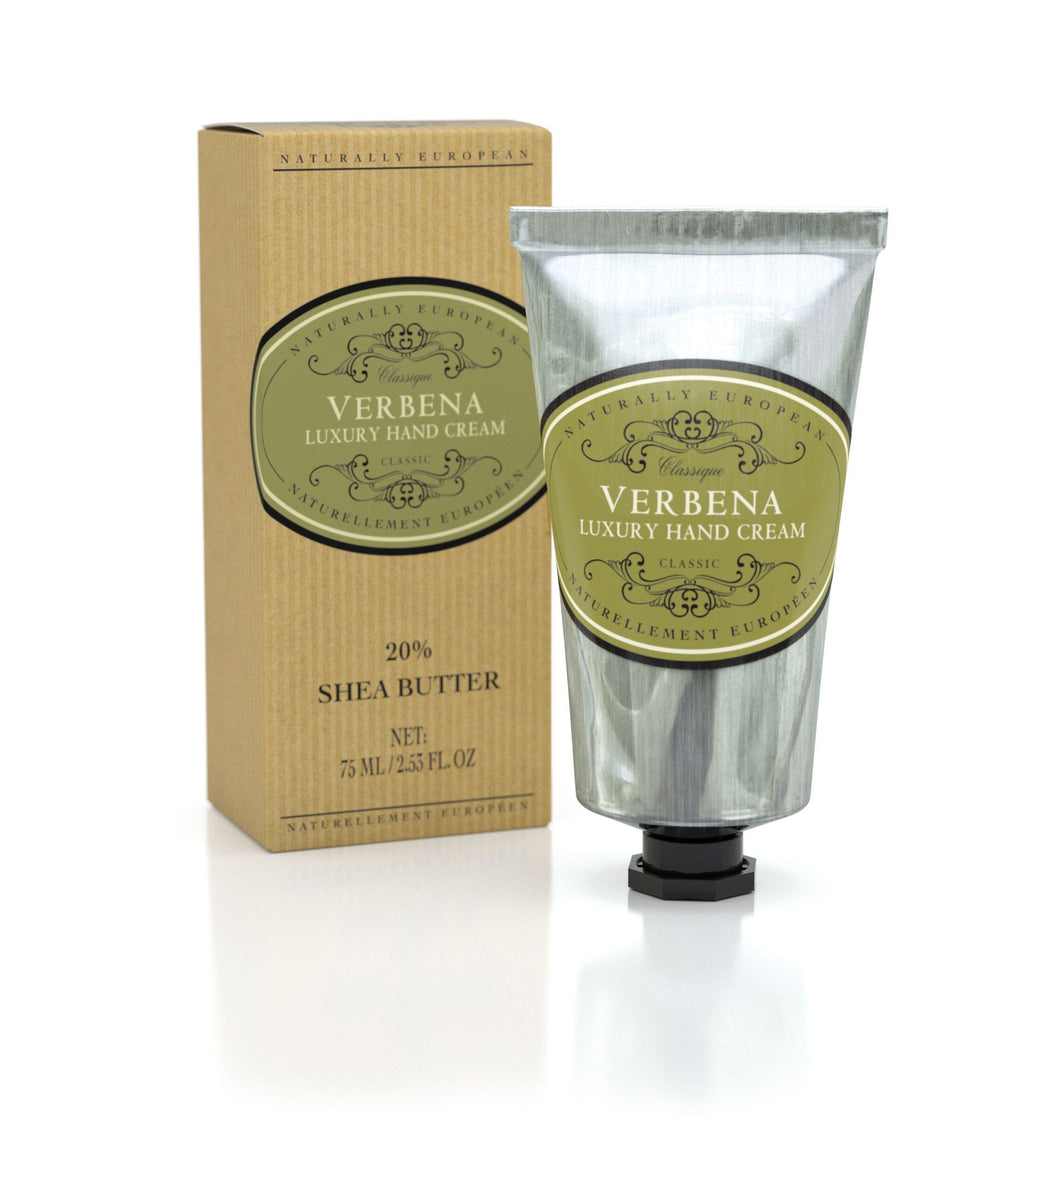 Naturally European Verbena - Luxury Hand Cream